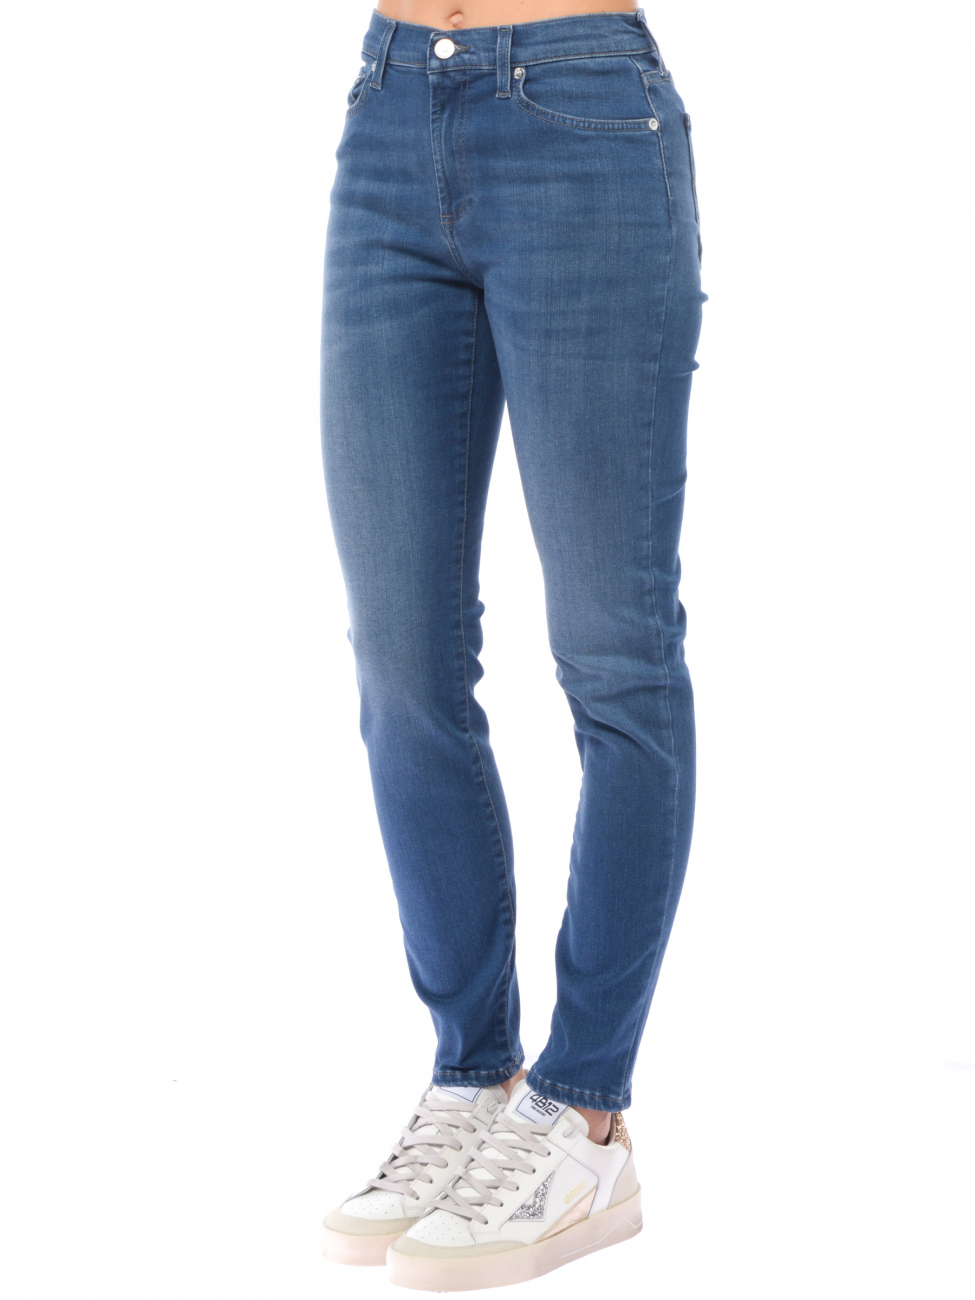 jeans da donna Roy Roger's Skinny in cotone e modal